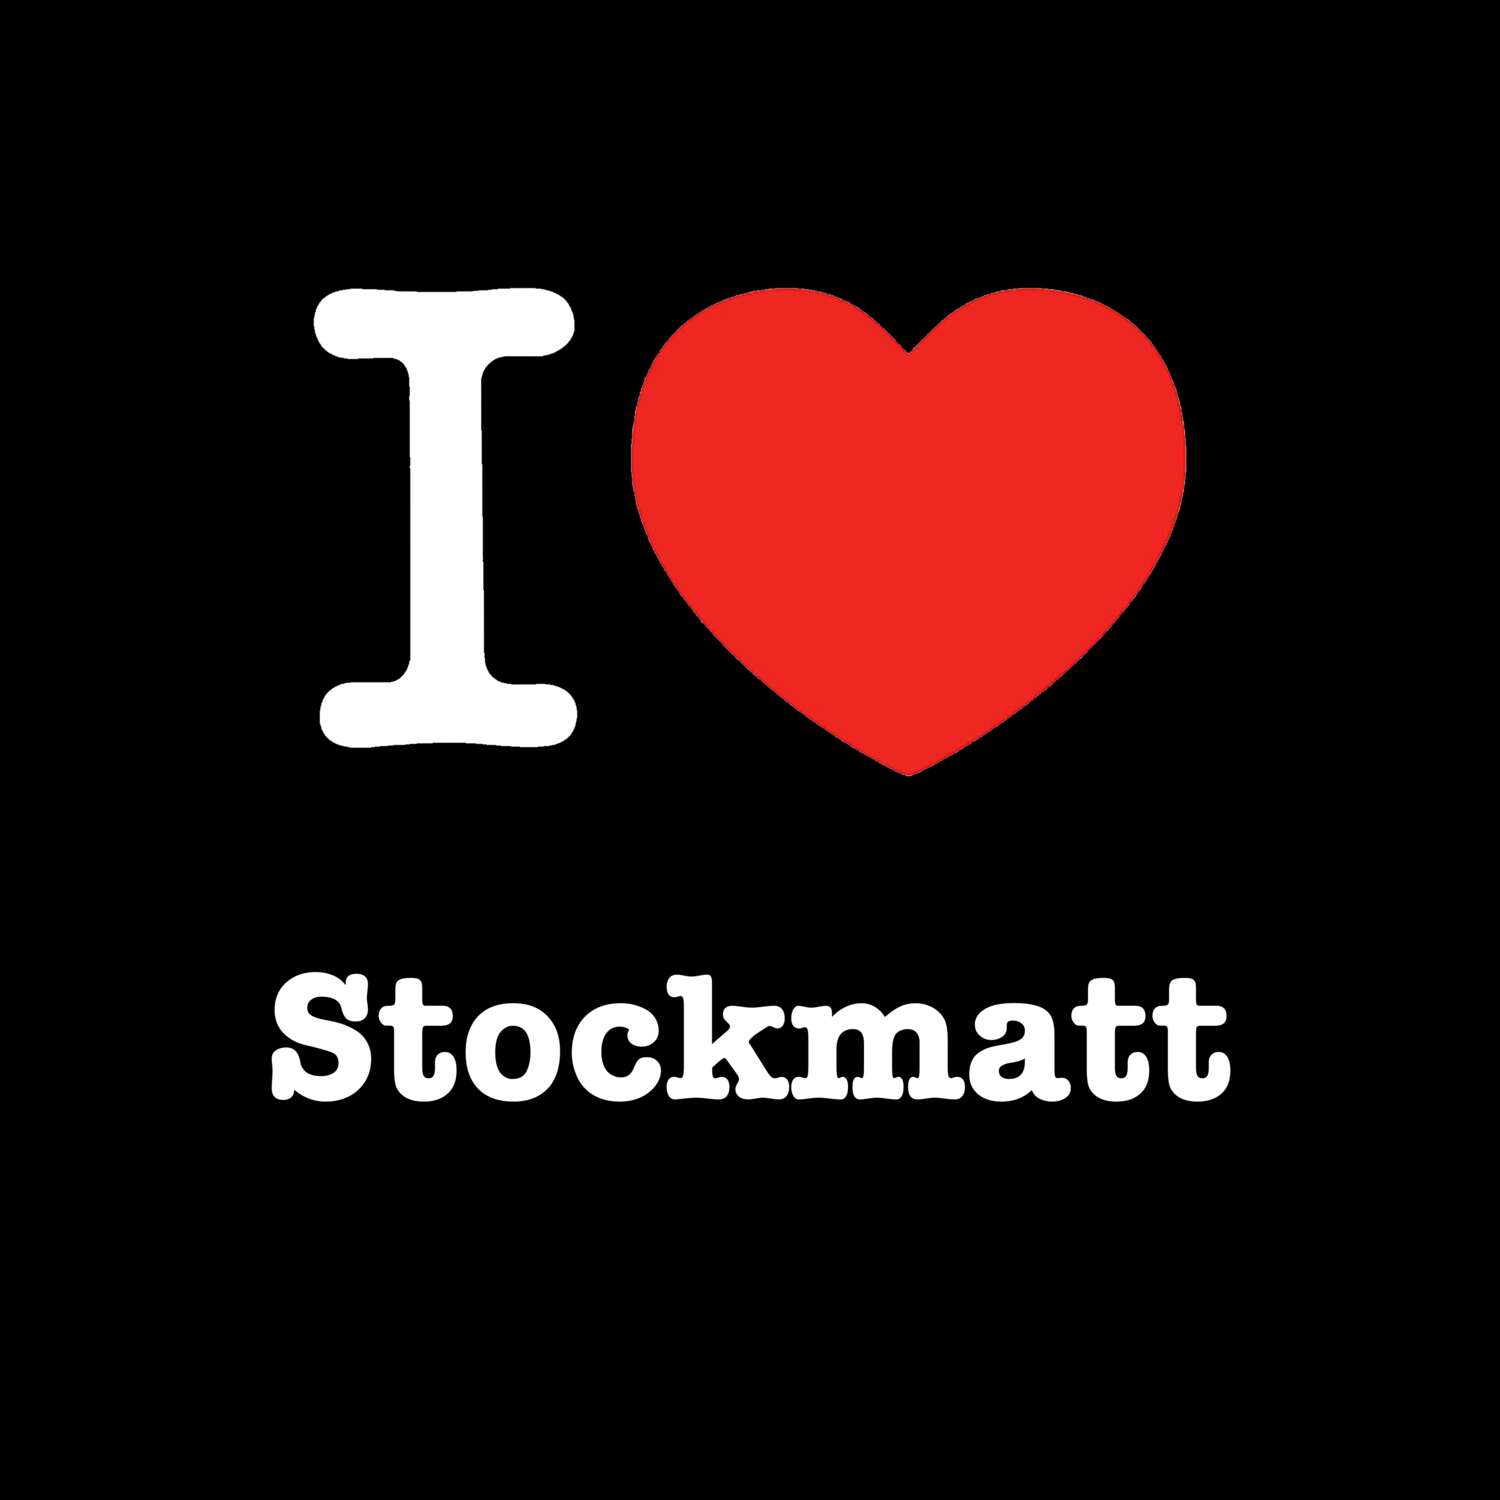 Stockmatt T-Shirt »I love«